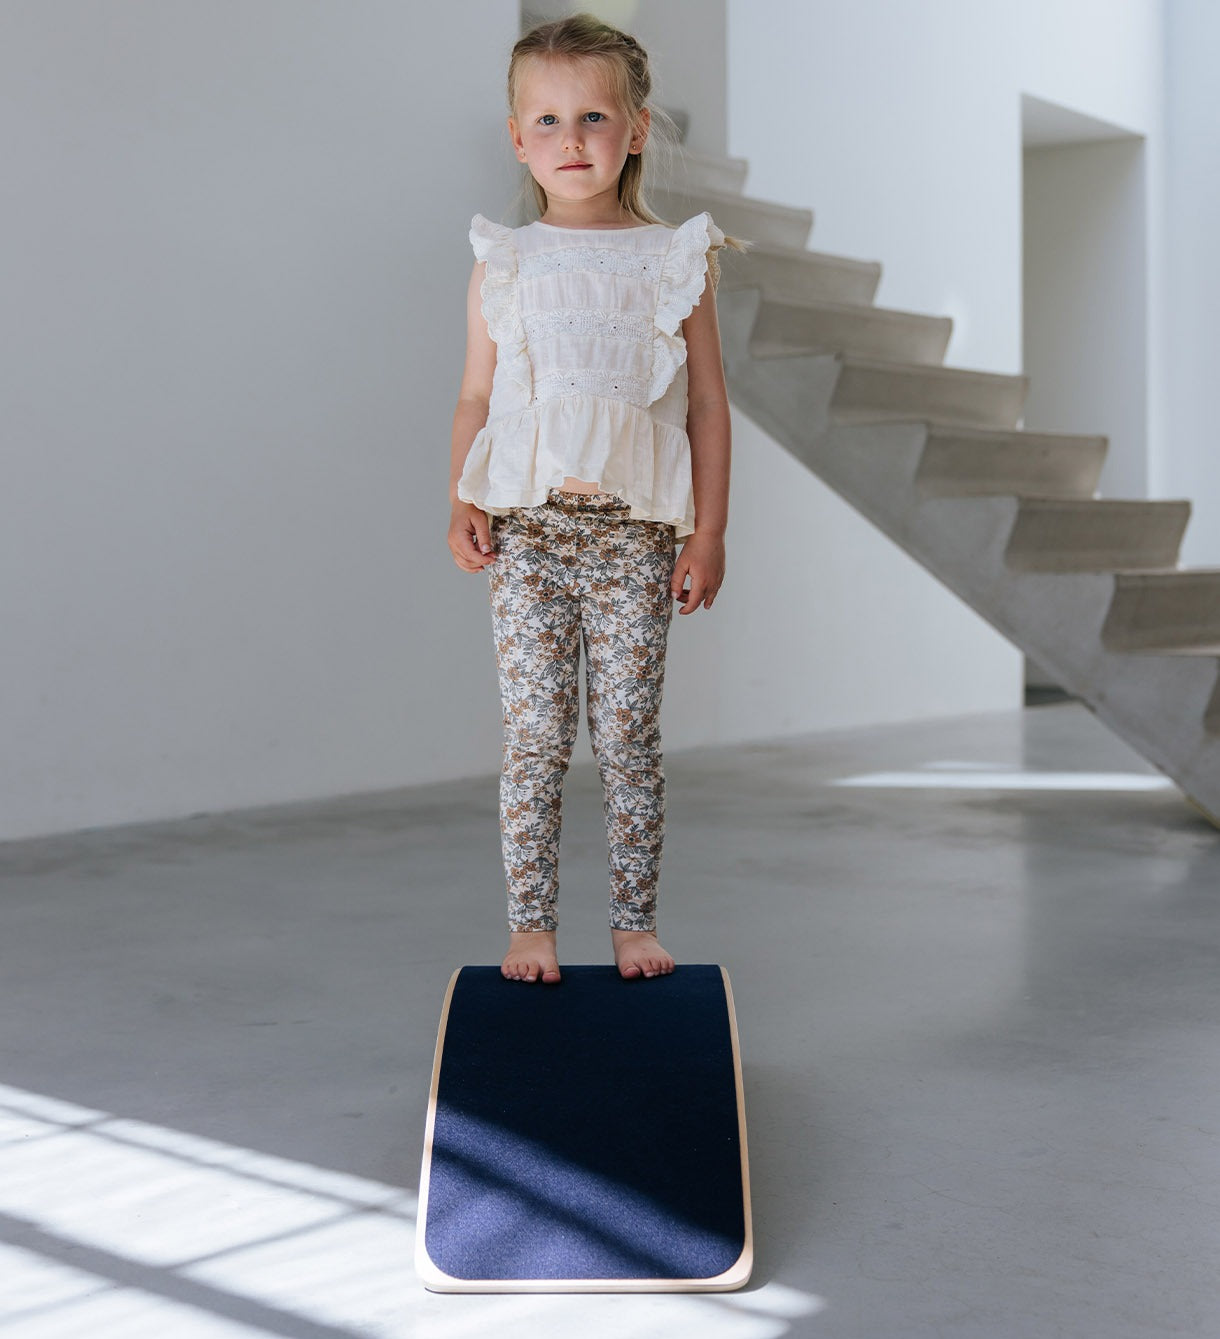 Balance board - hout - met blauw vilt